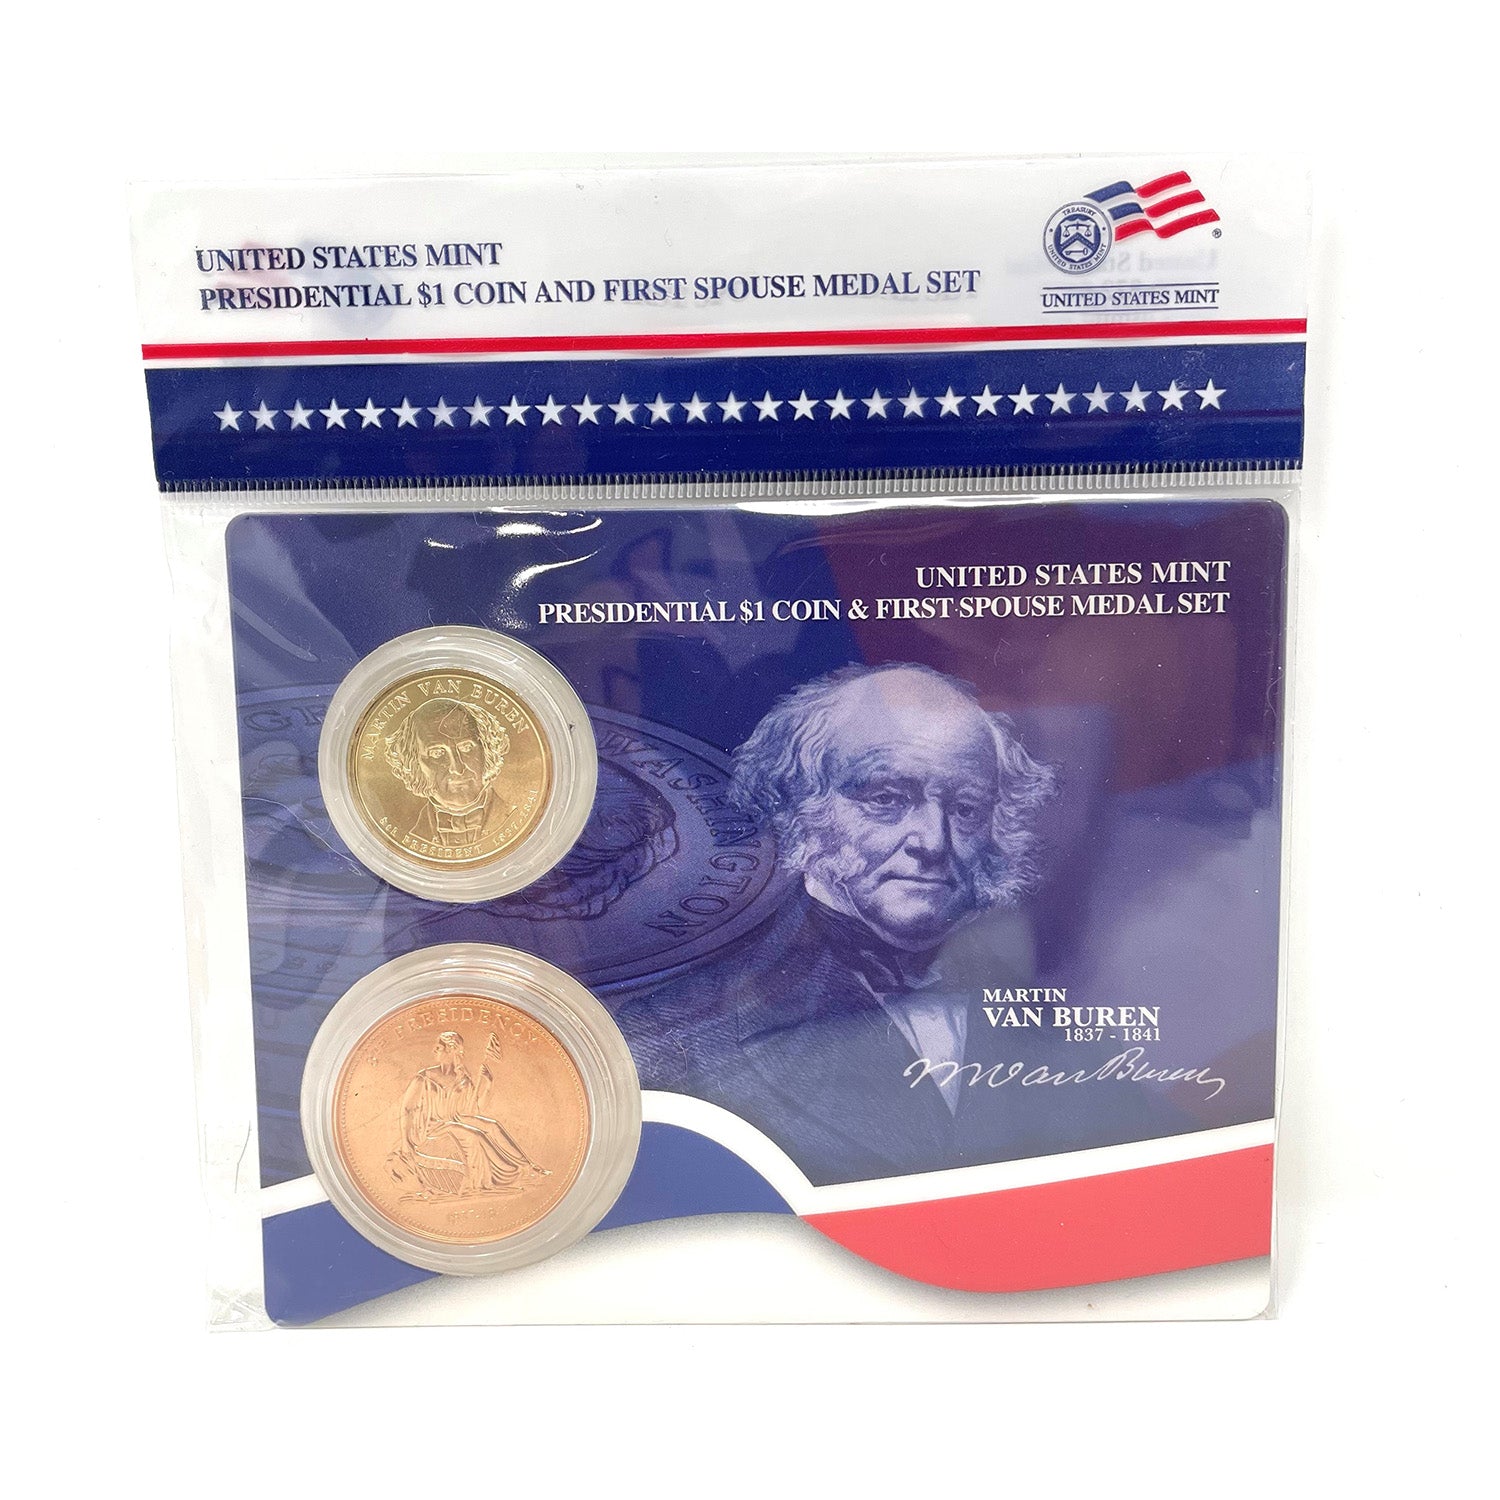 U.S. Mint Presidential $1 Coin and Spouse Medal Set: Martin Van Buren